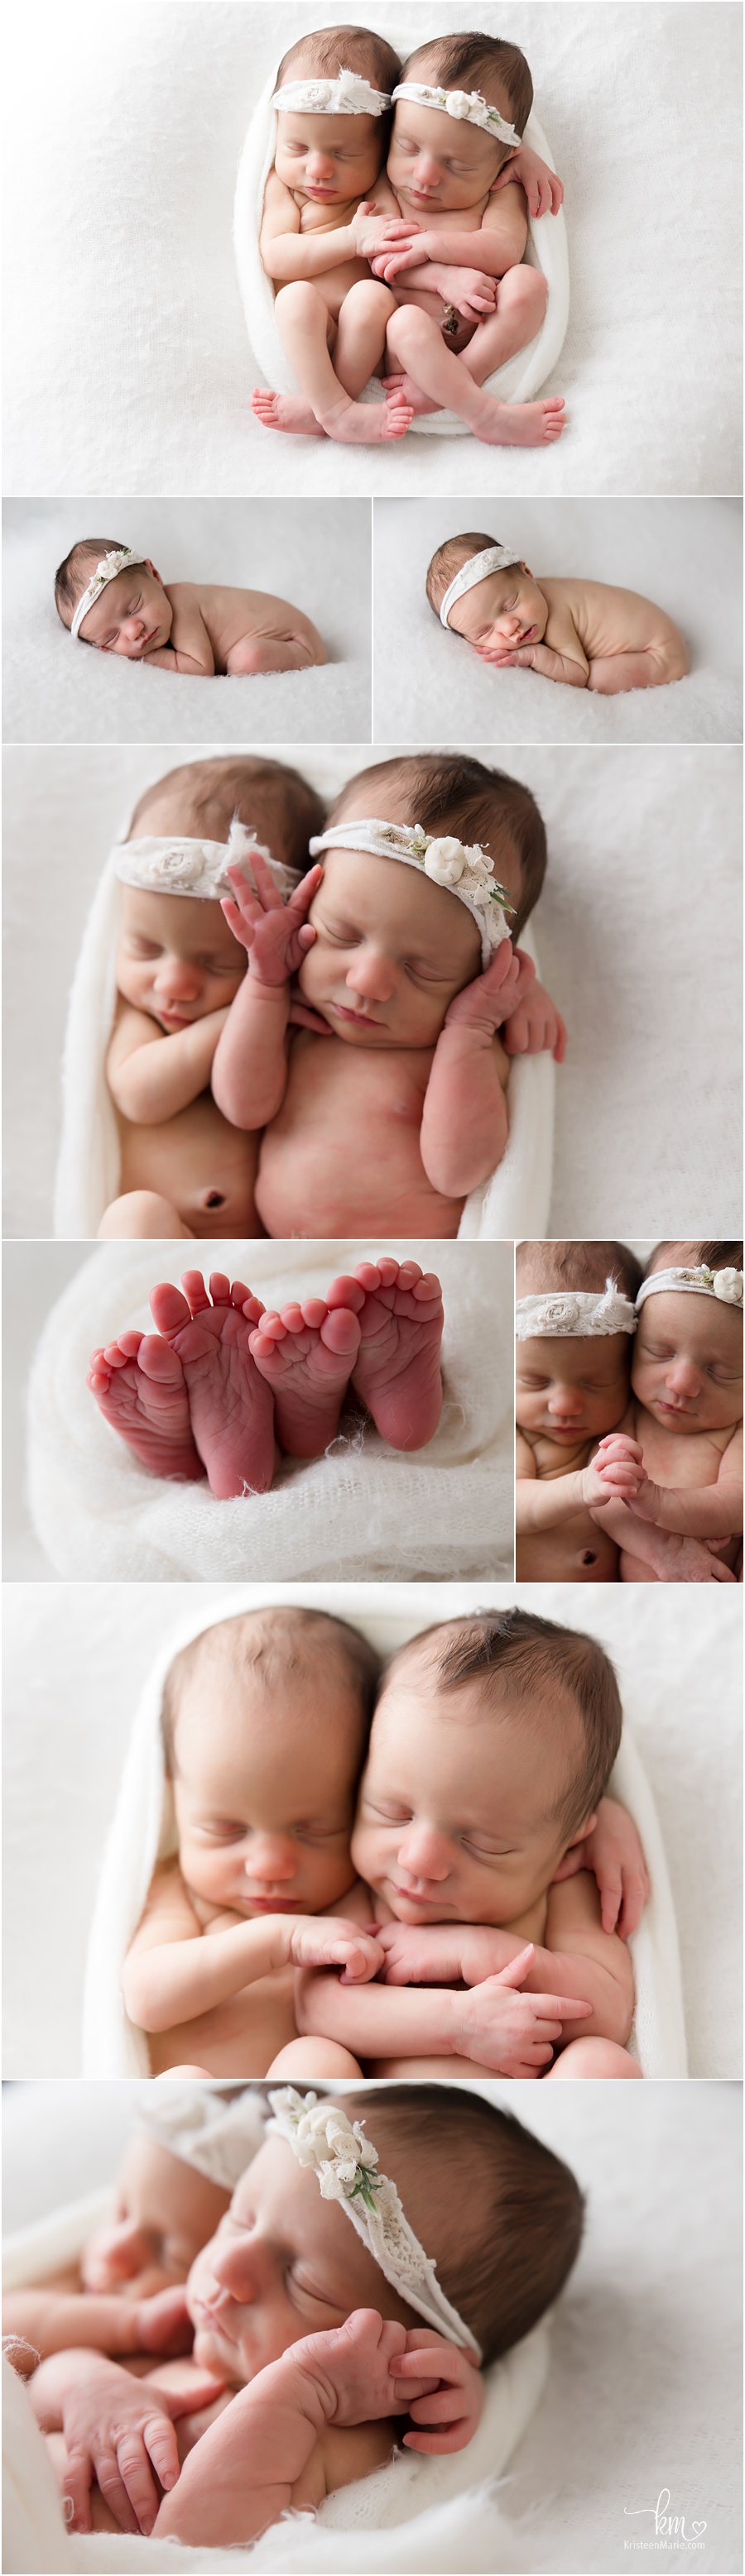 sleeping newborn baby girls on white - fraternal twin girls